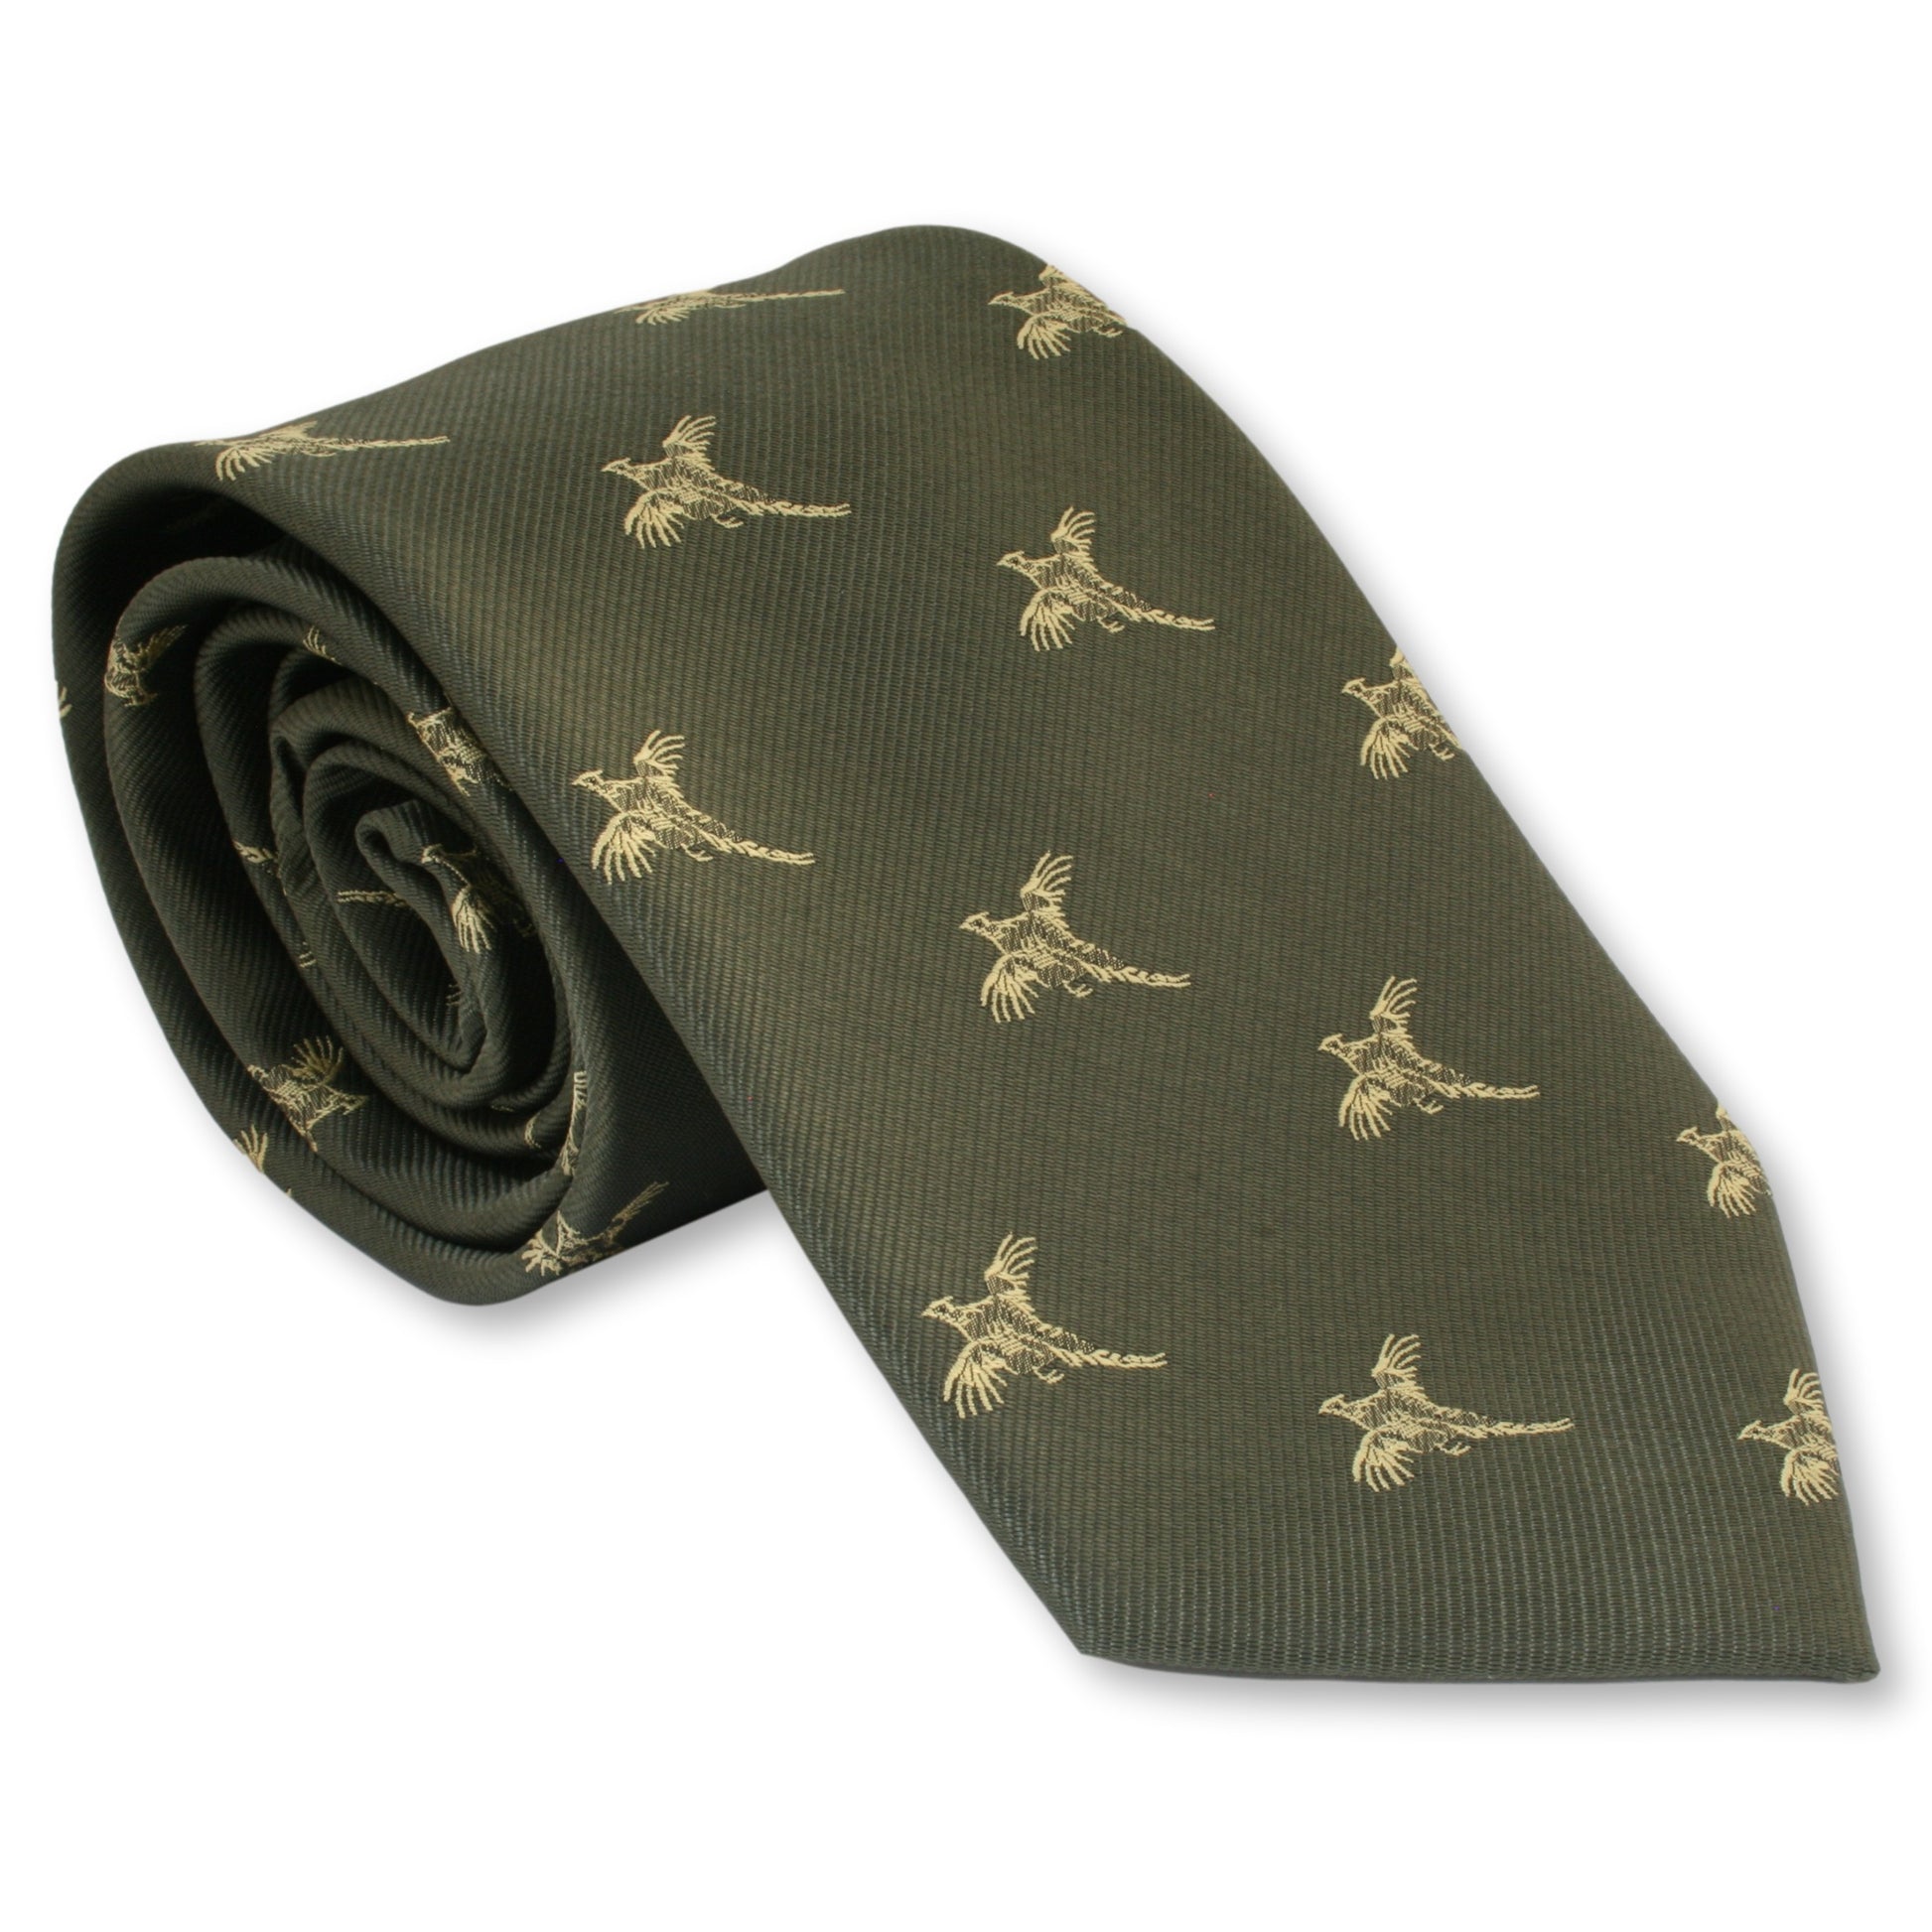 Green Pheasant Tie gamekeepers Cottage Gifts